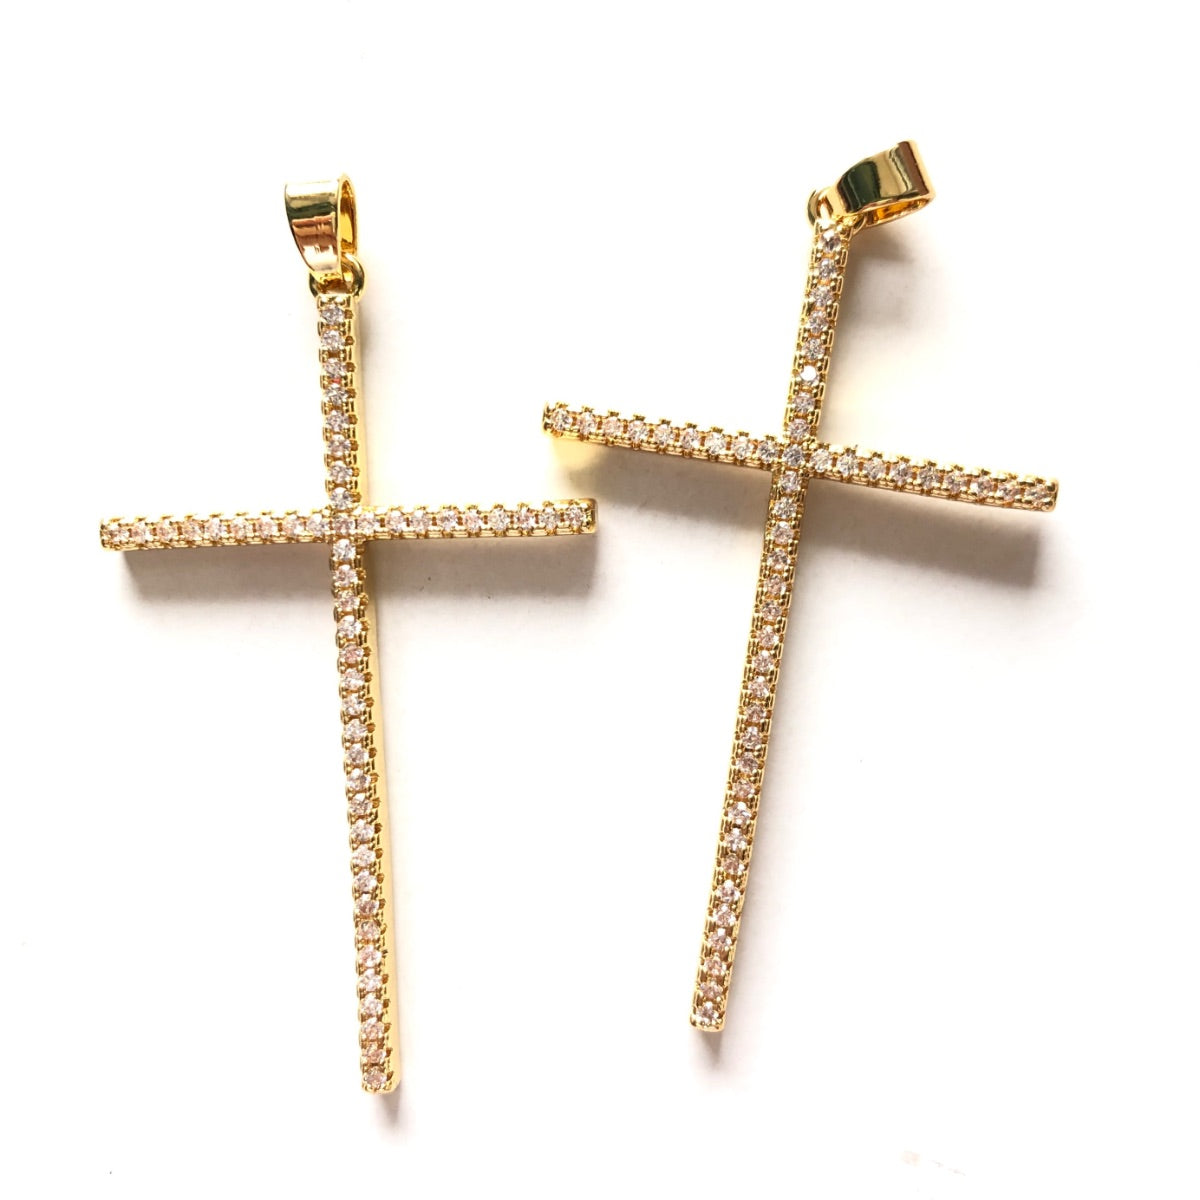 10pcs/lot Big Size Slim CZ Paved Cross Charms Gold CZ Paved Charms Crosses New Charms Arrivals Charms Beads Beyond